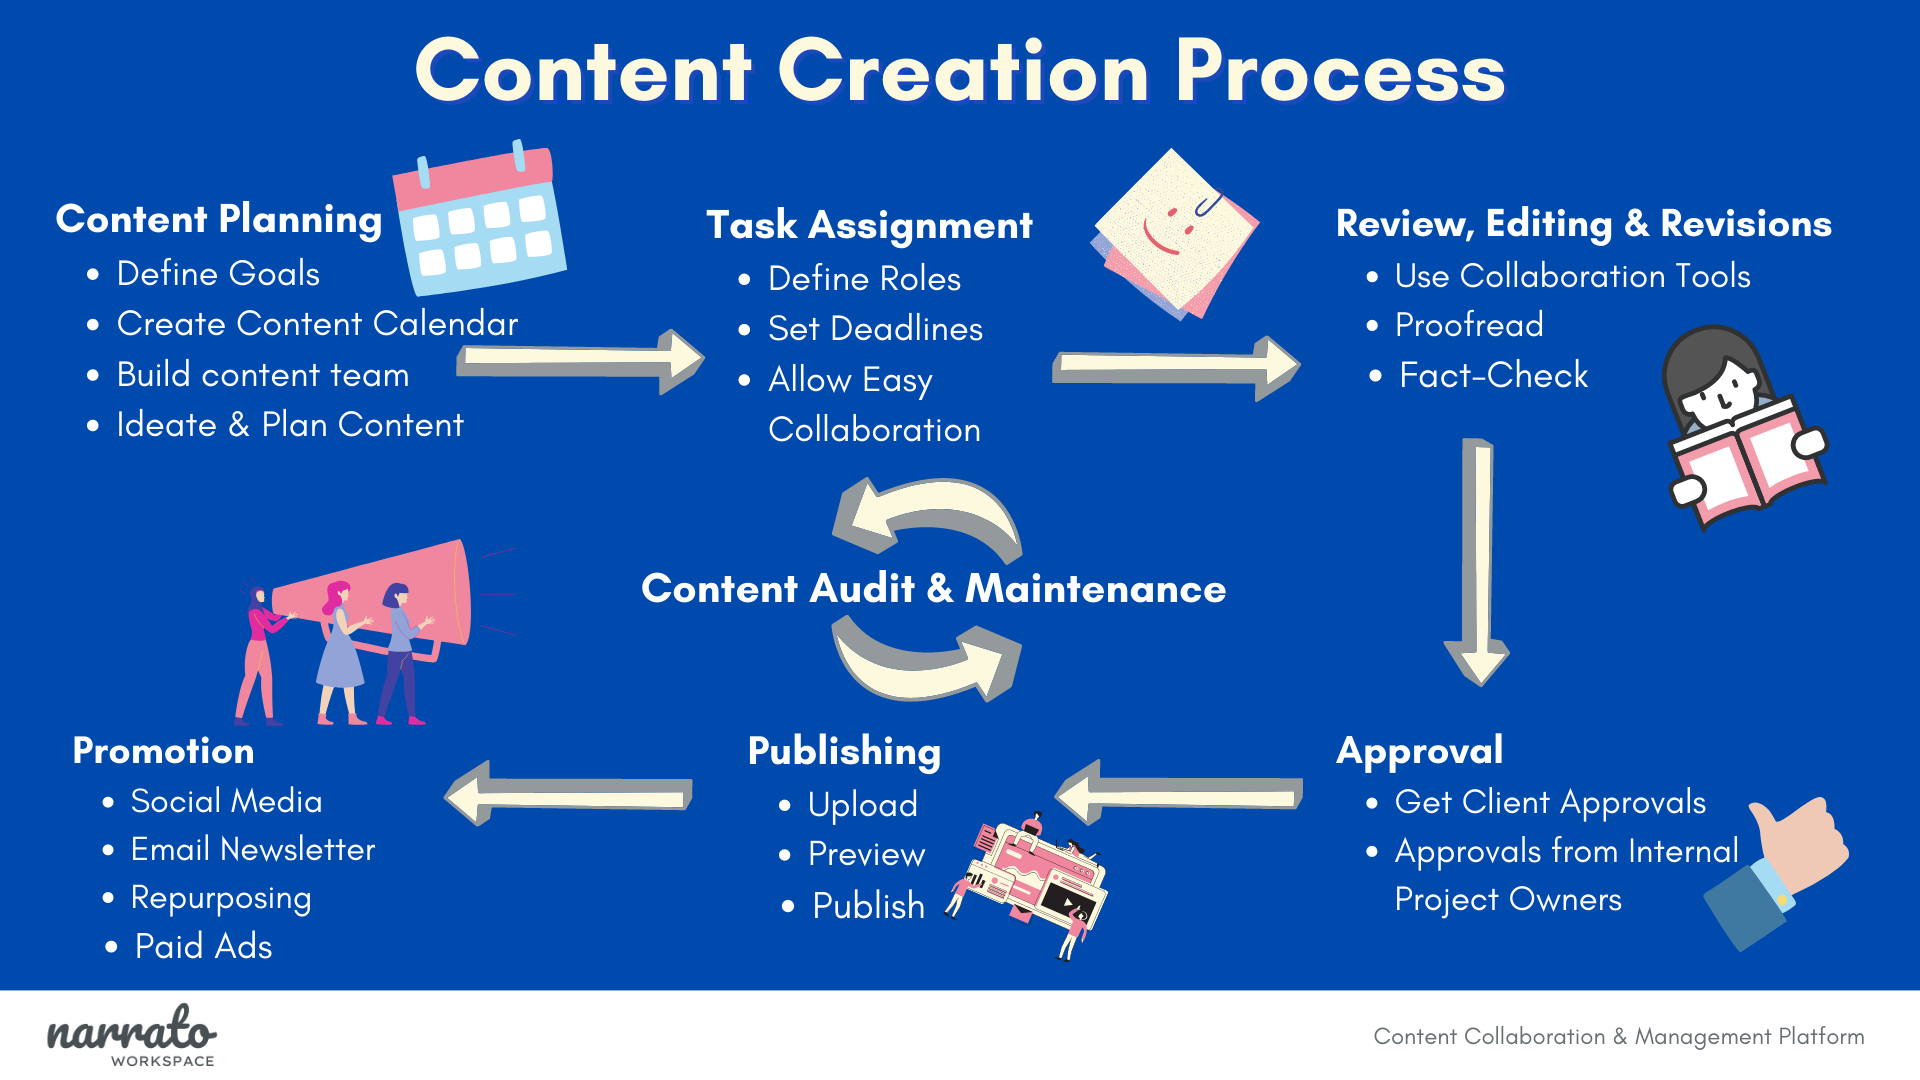 Content Creation Process Steps